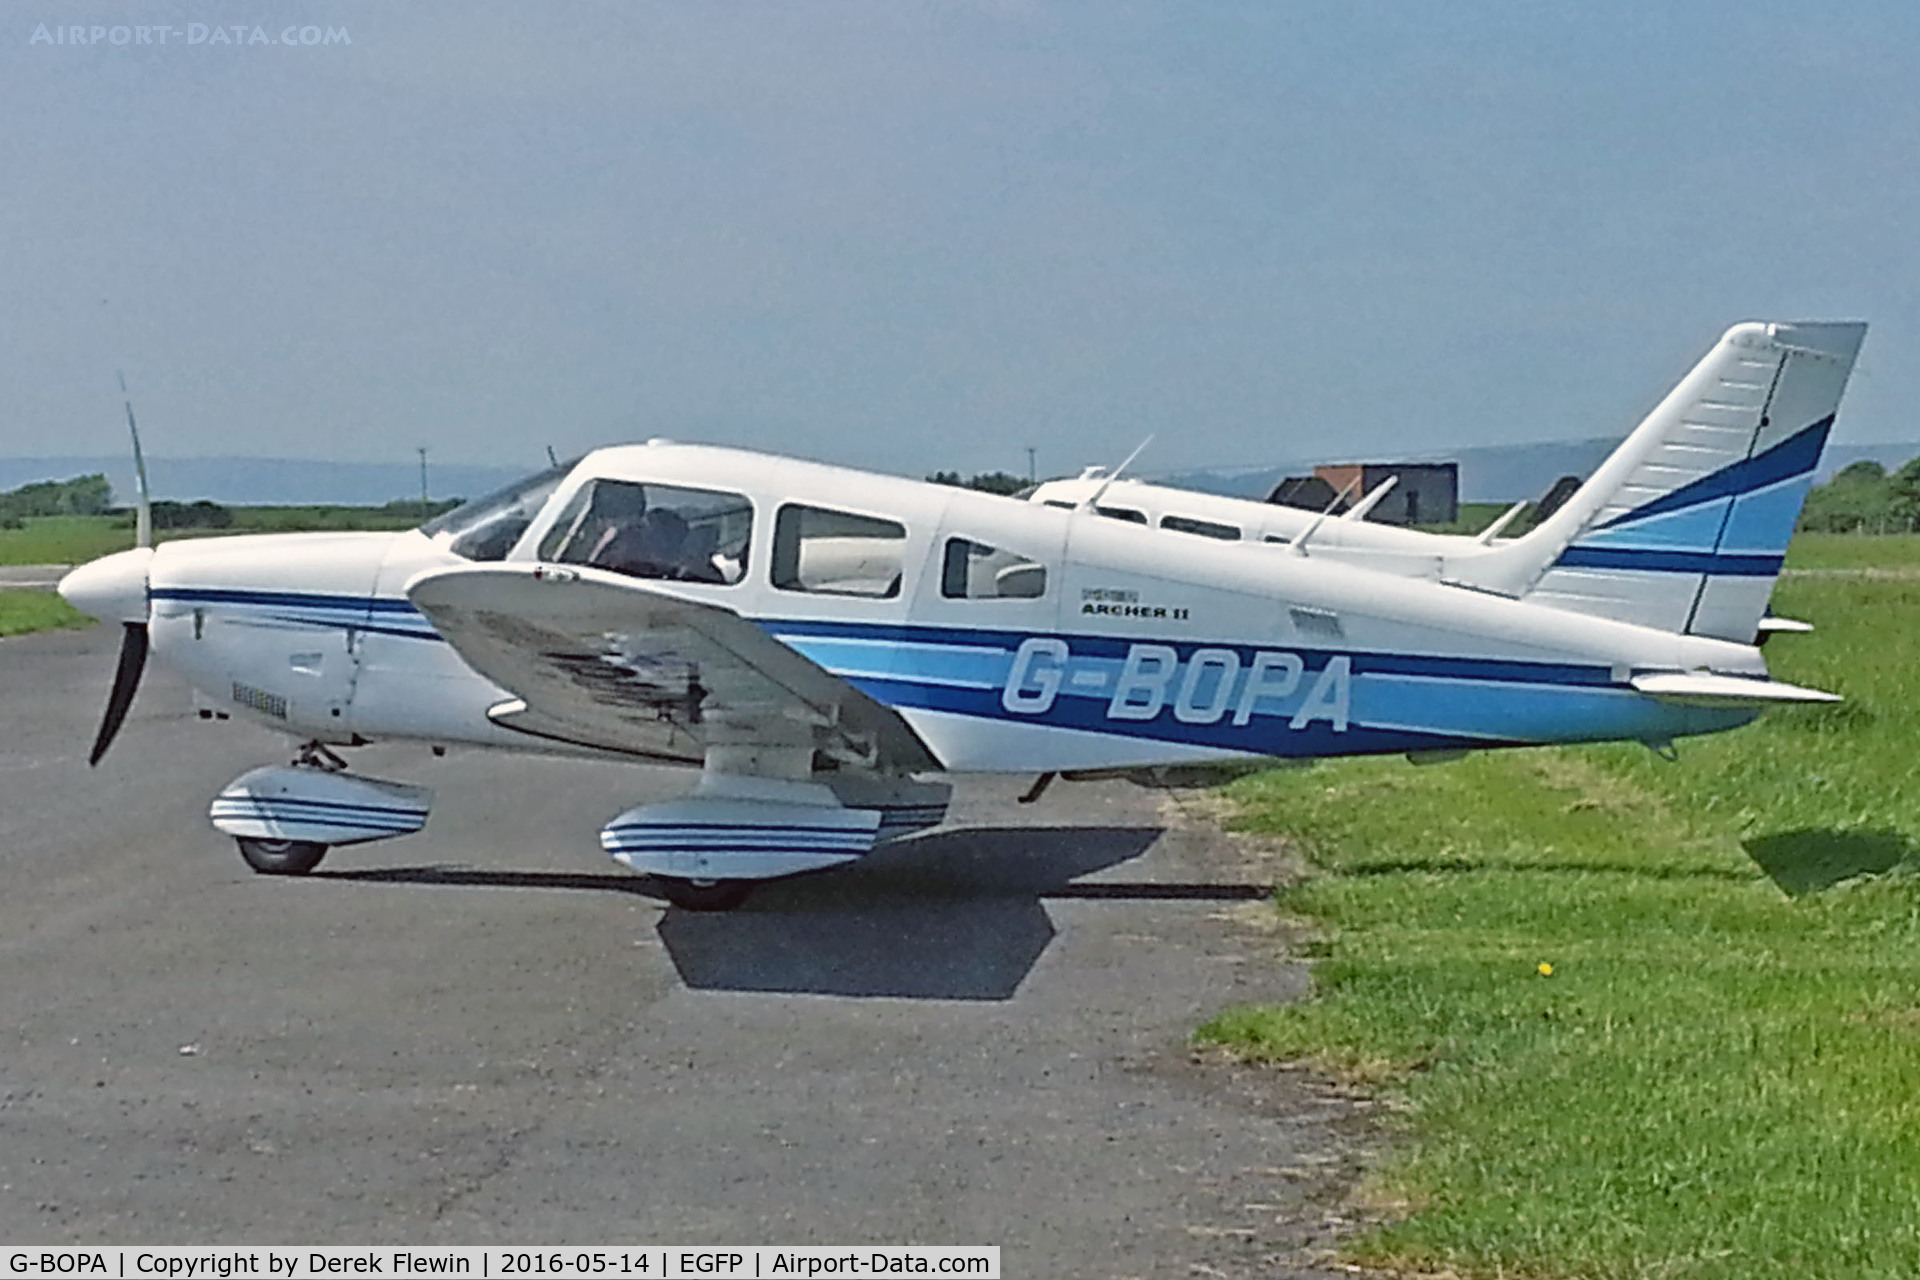 G-BOPA, 1984 Piper PA-28-181 Cherokee Archer II C/N 28-8490024, Cherokee Archer II, Denham based, previously N43299, seen aprked up.